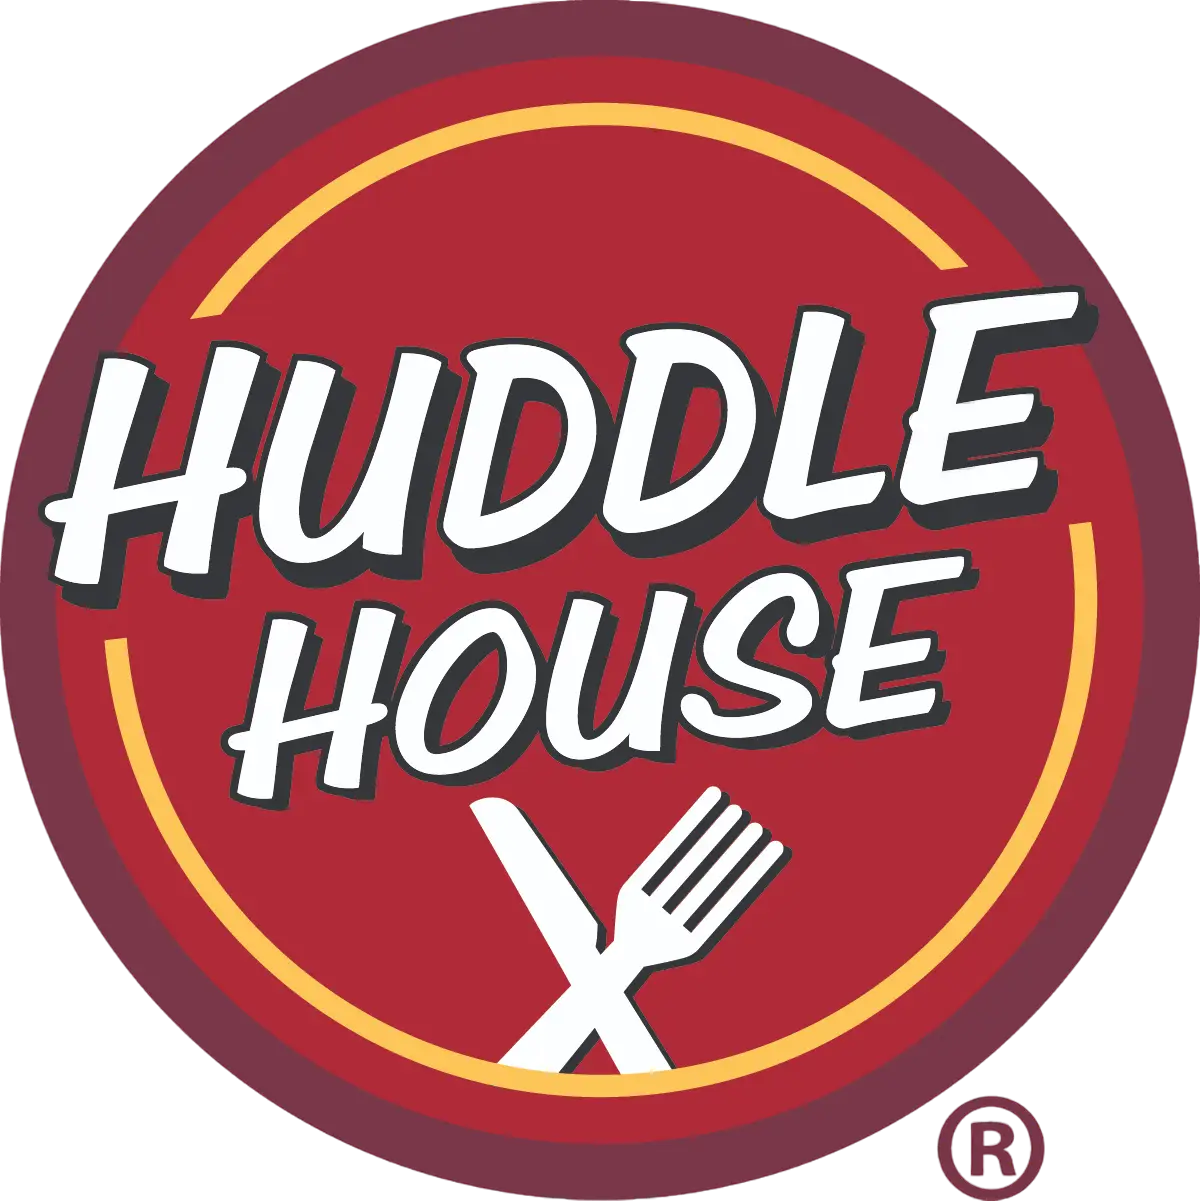 Huddle House logo transparent